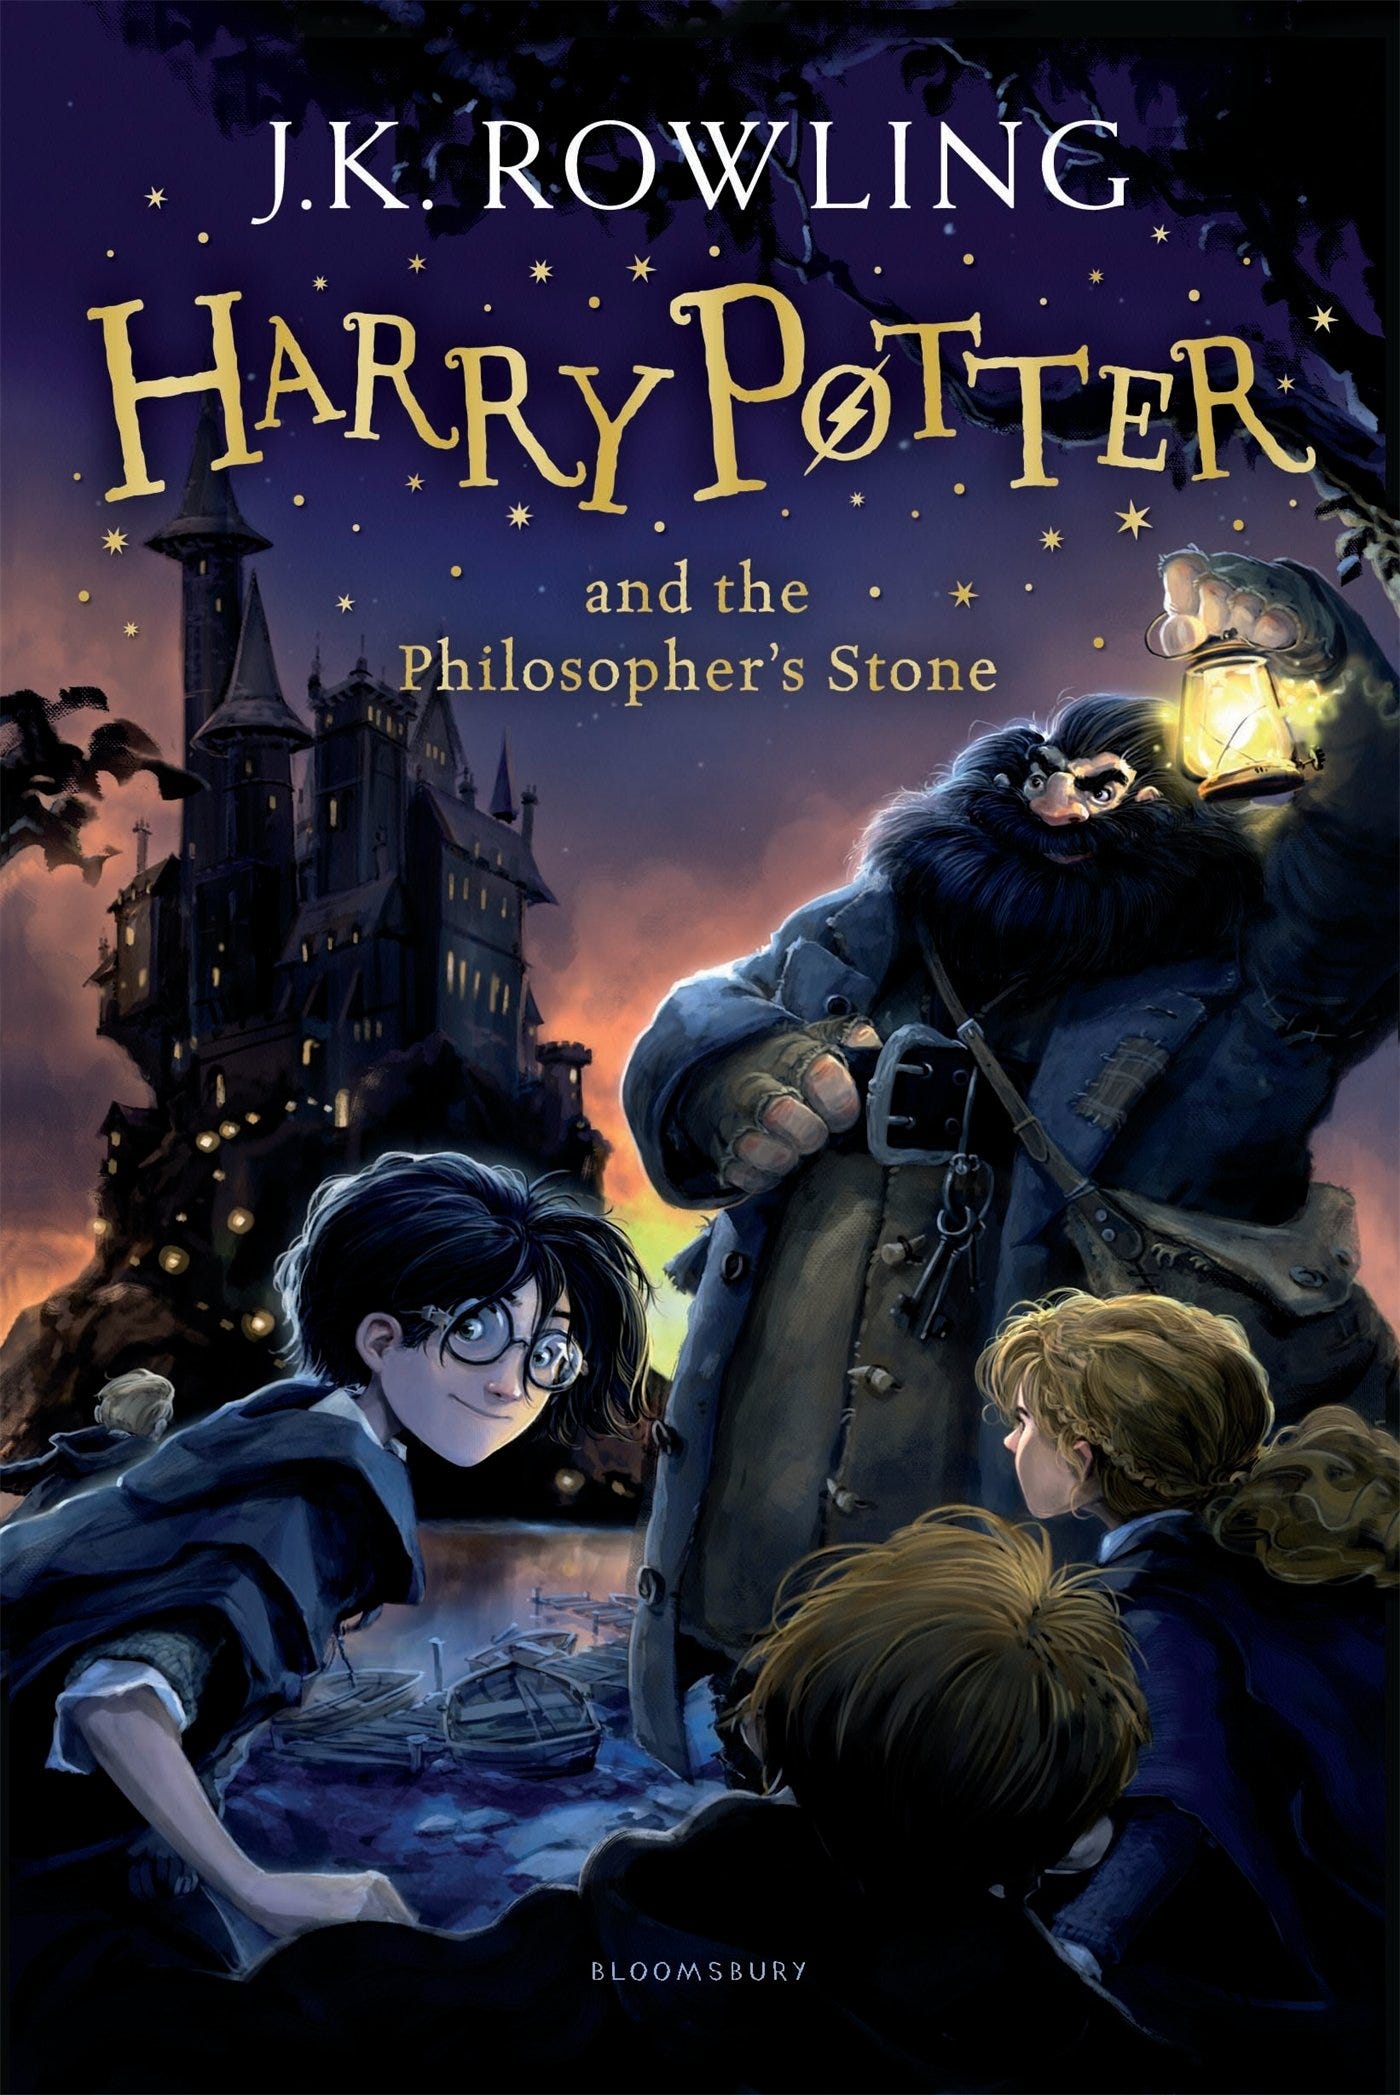 Harry Potter and the Sorcerer's Stone Minerva McGonagall 1/6